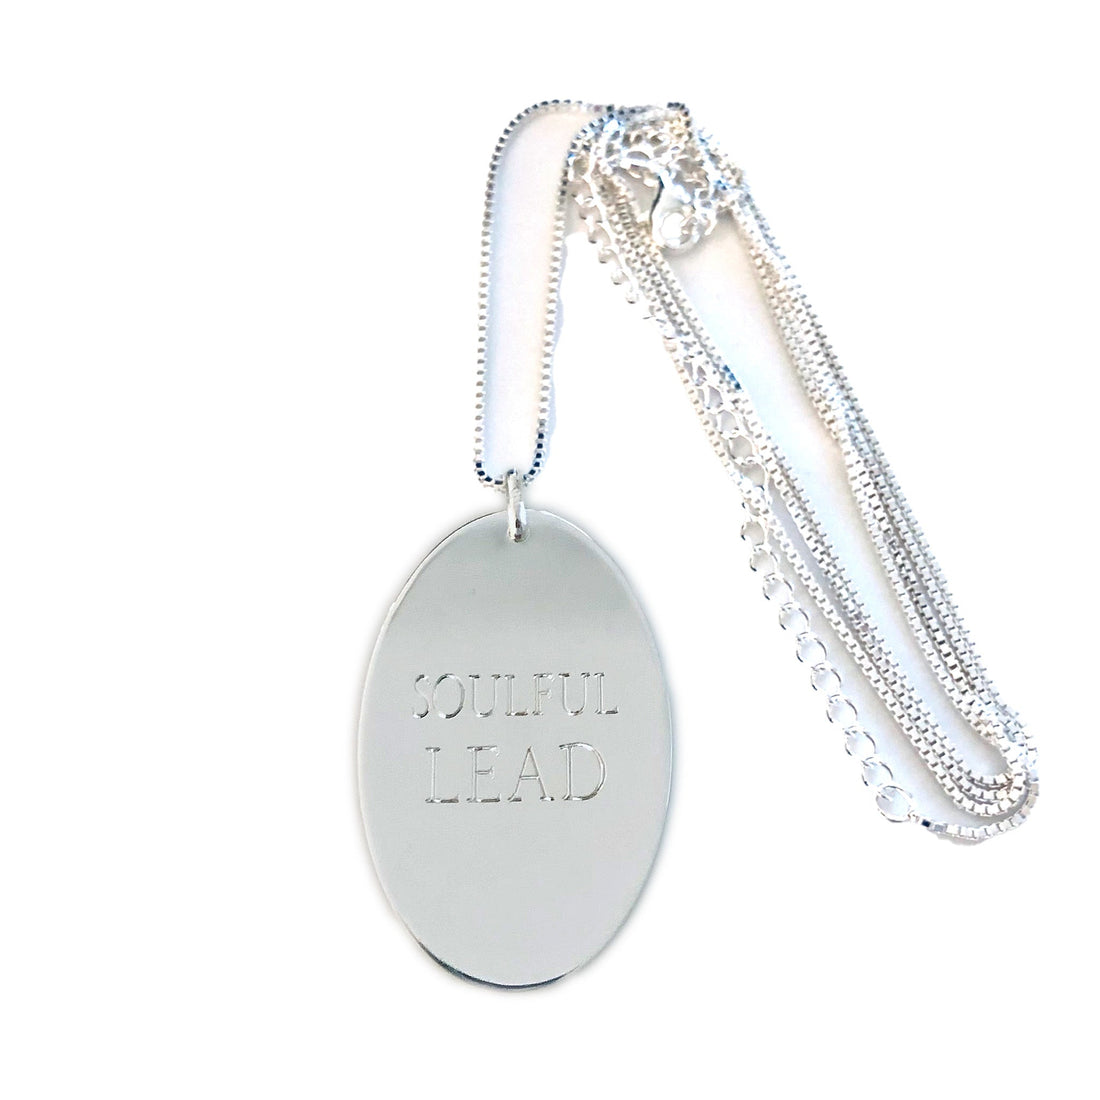 Al segno ellips soulful lead silver necklace with venetian chain.